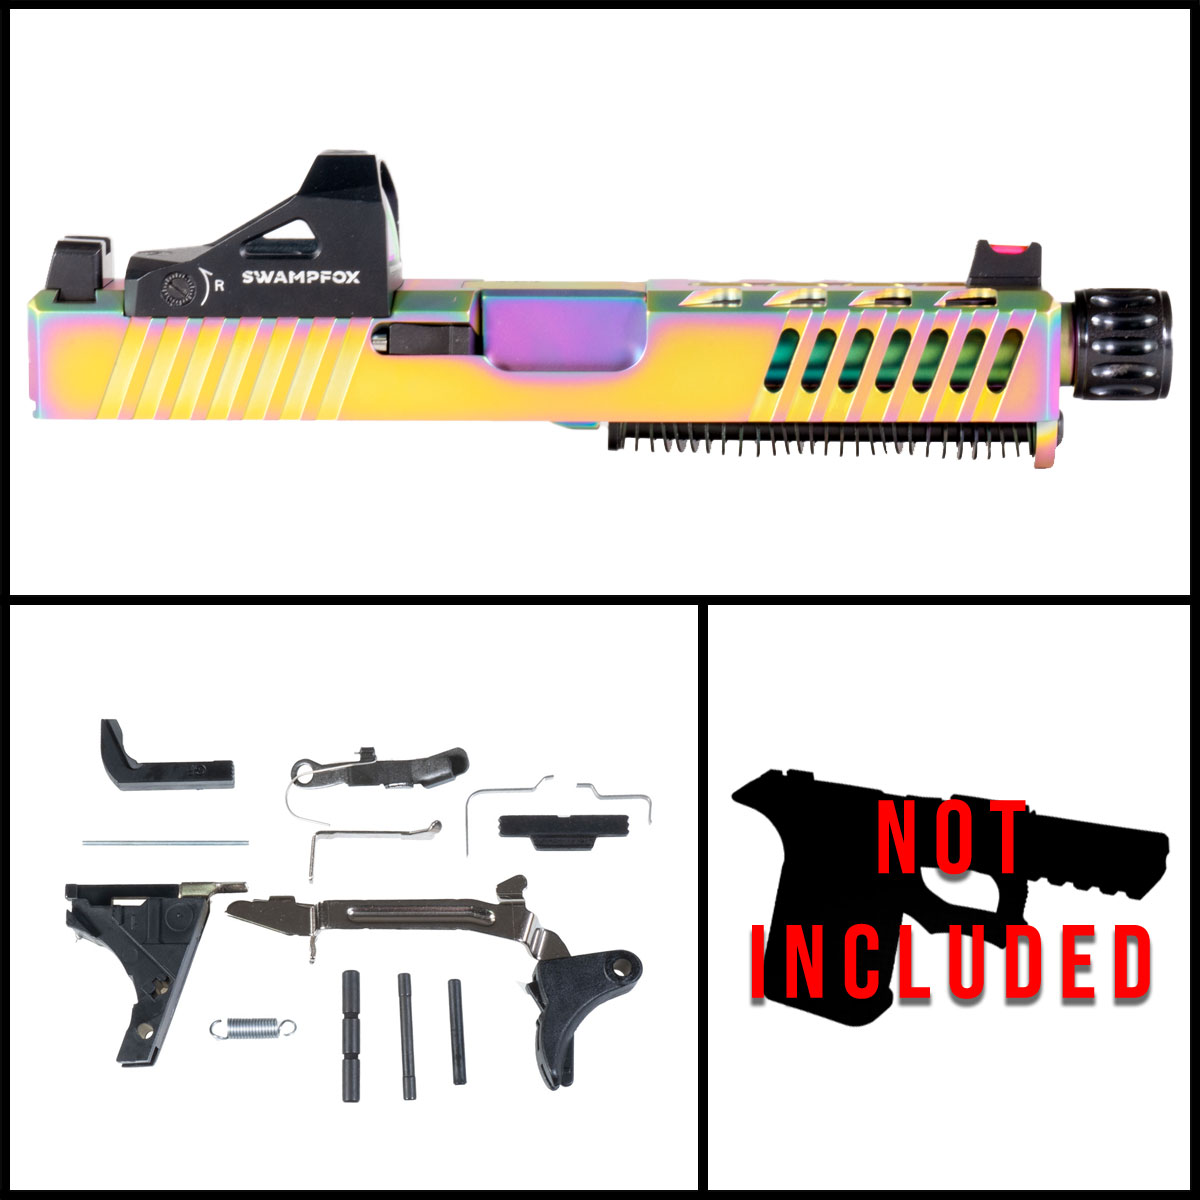 DDS 'Lumina w/ Swampfox Justice RMR' 9mm Full Pistol Build Kits (Everything Minus Frame) - Glock 19 Gen 1-2 Compatible